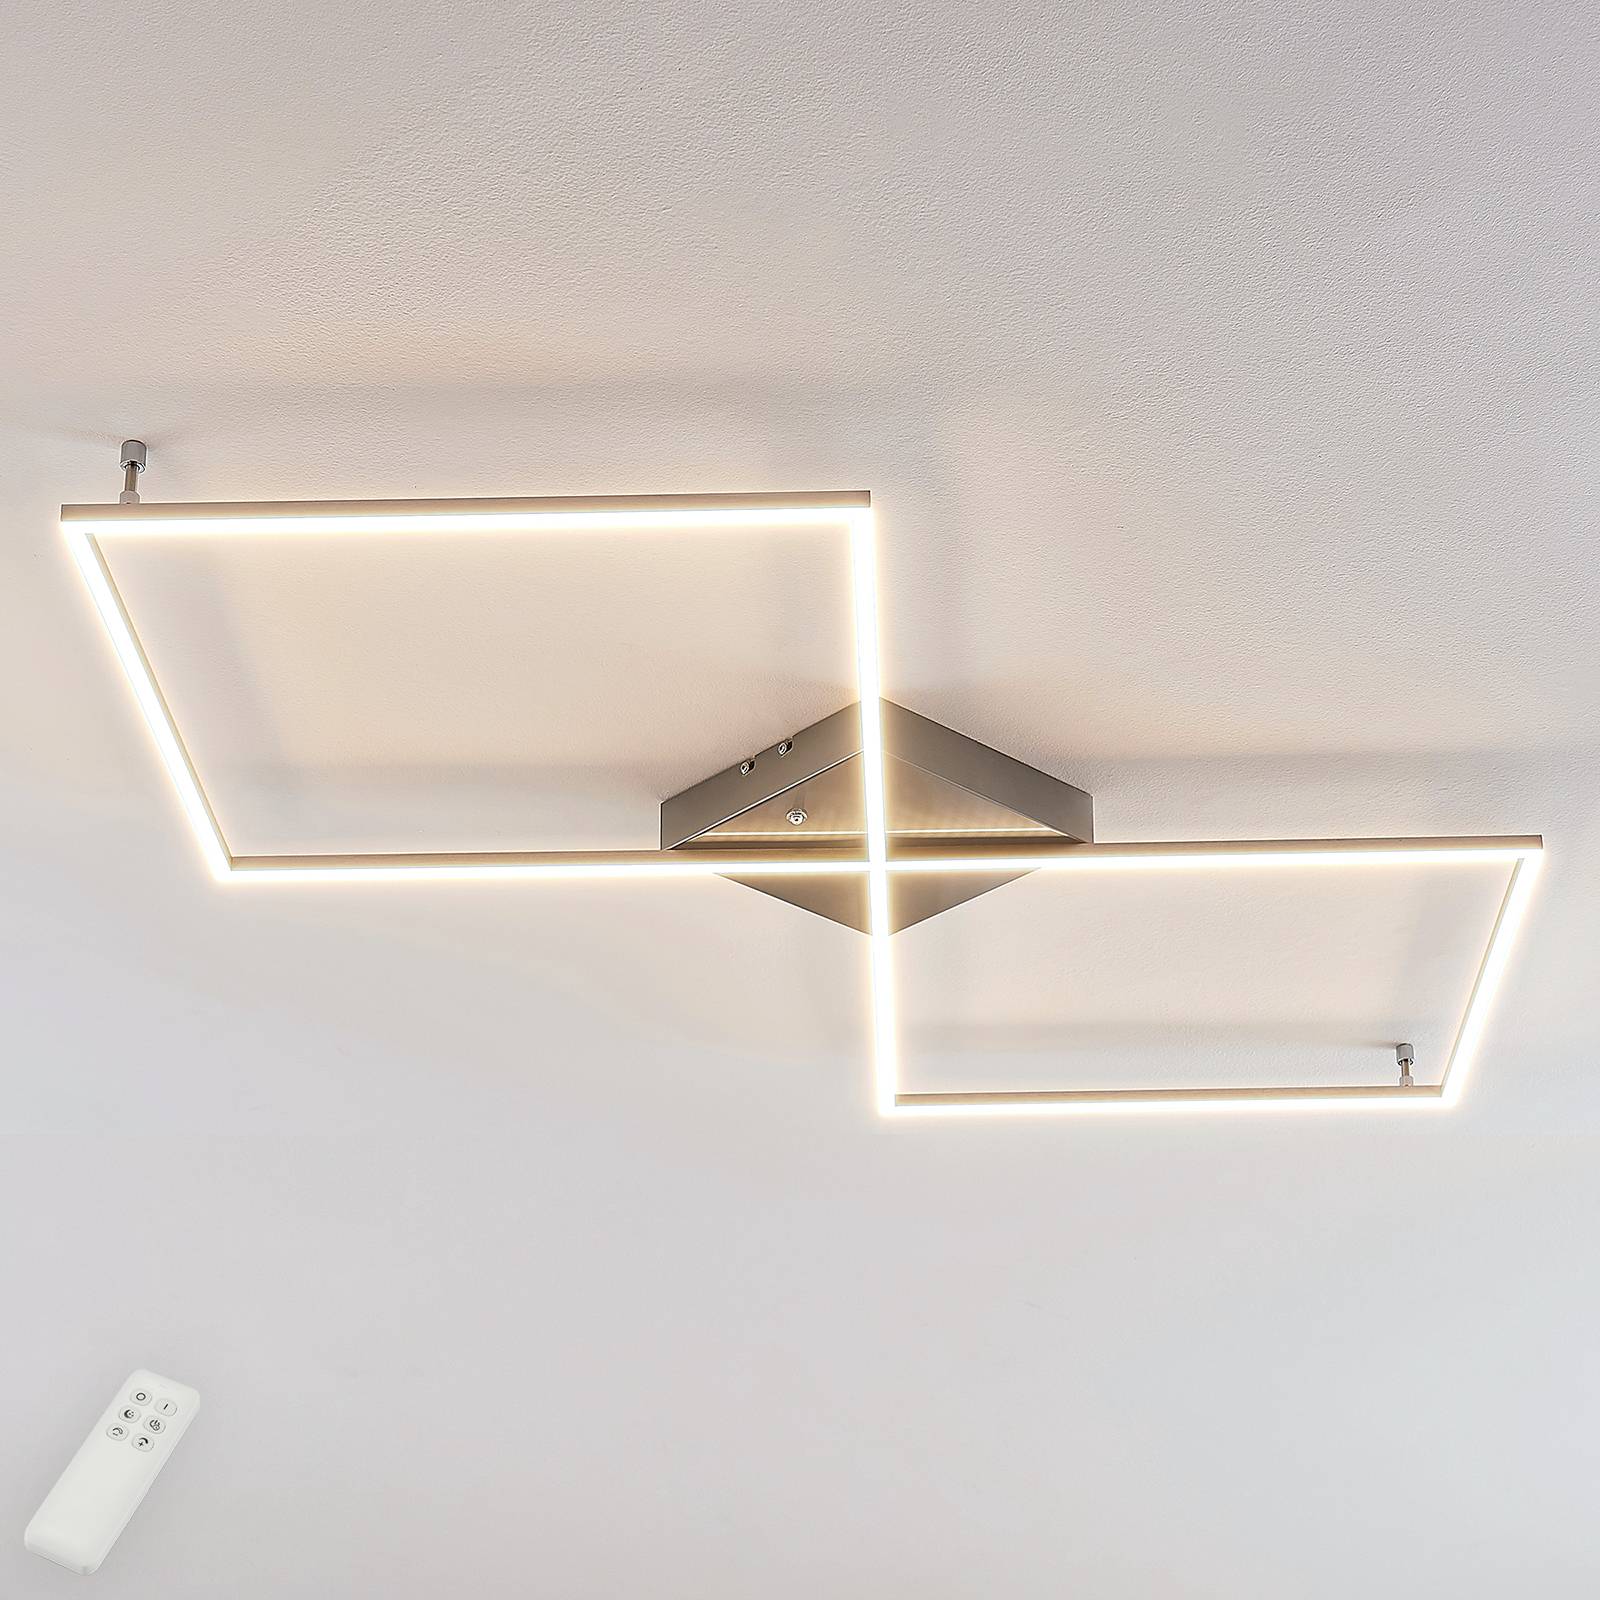 Rechte LED plafondlamp Romee m. afstandsbediening